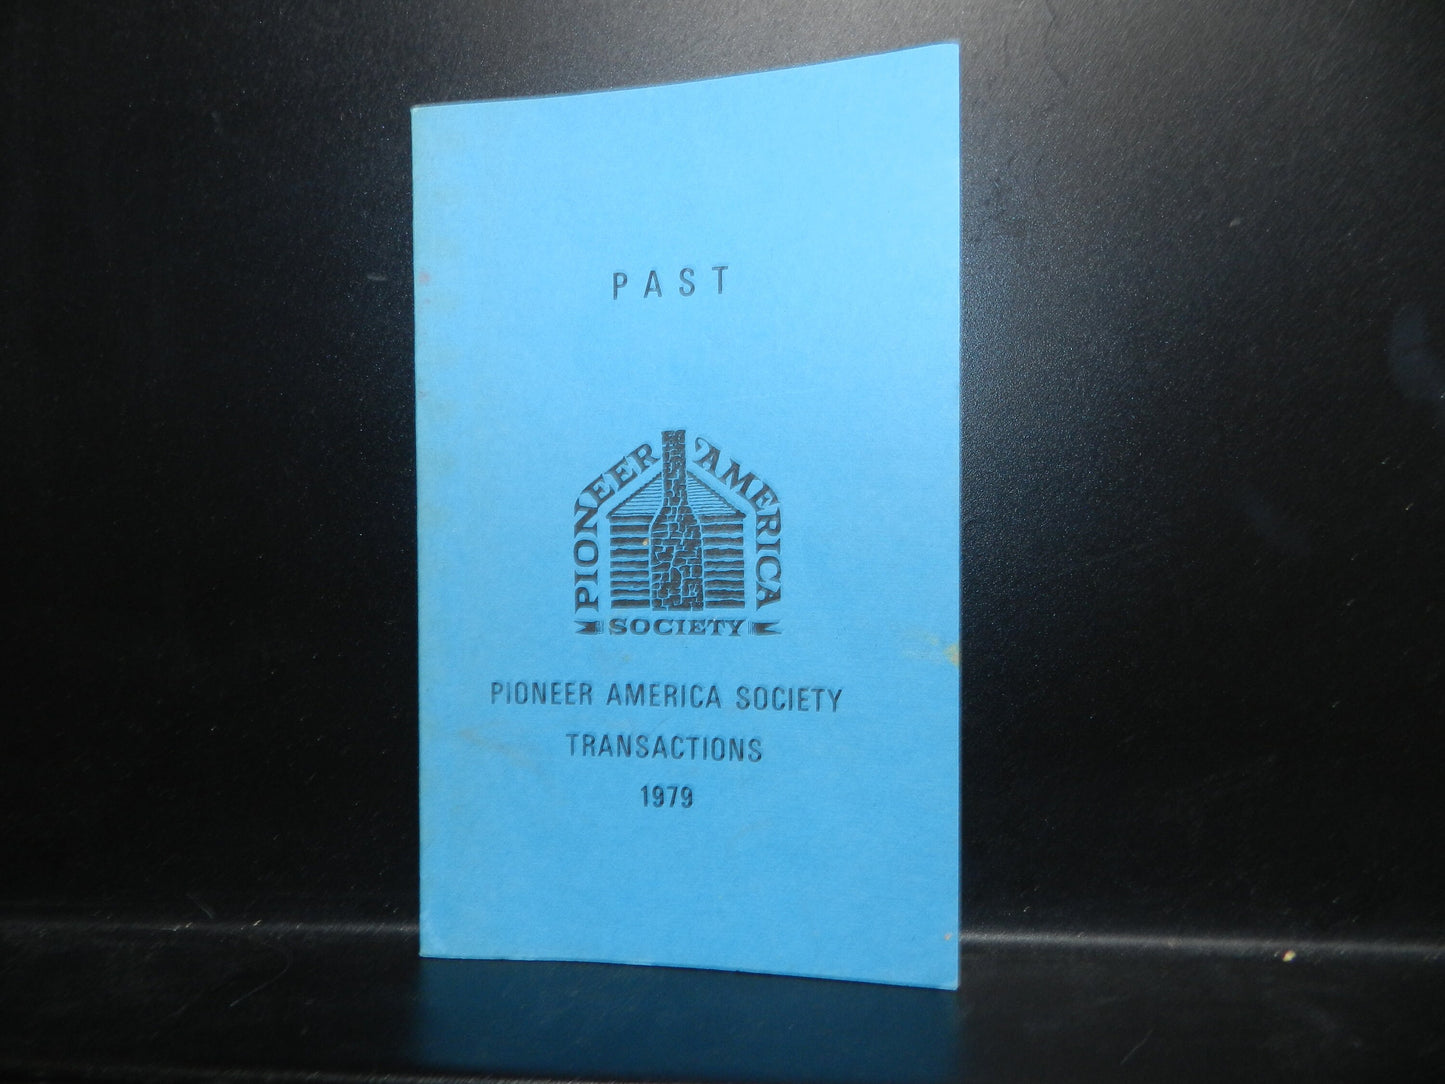 Vintage Book - "Pioneer America Society Transactions 1979" Vol. II